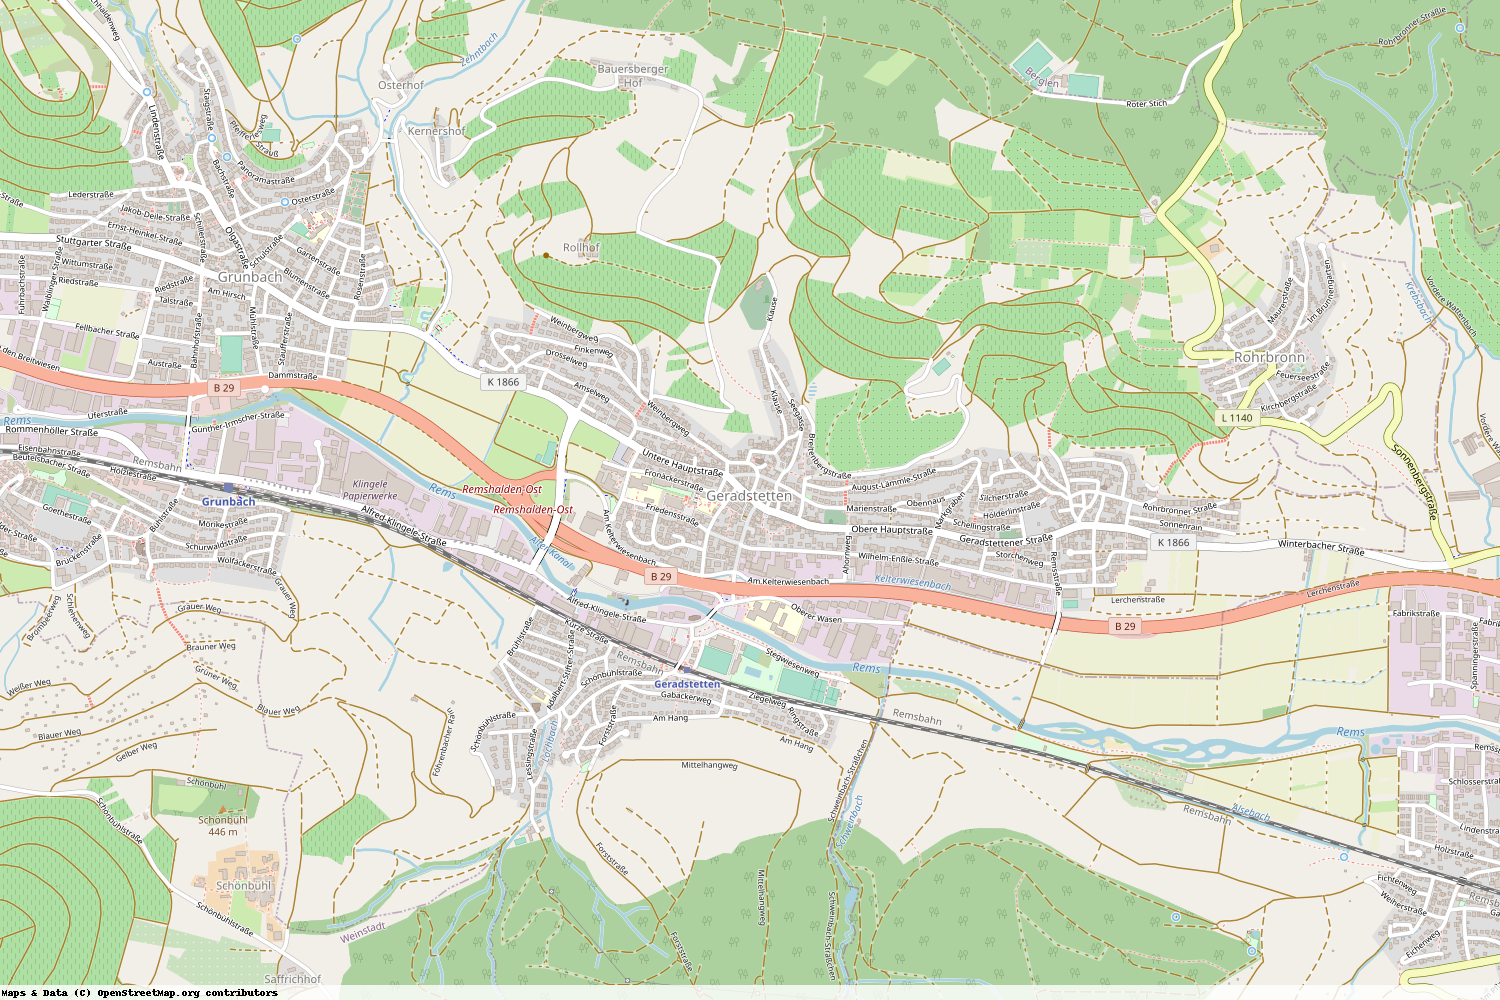 Ist gerade Stromausfall in Baden-Württemberg - Rems-Murr-Kreis - Remshalden?